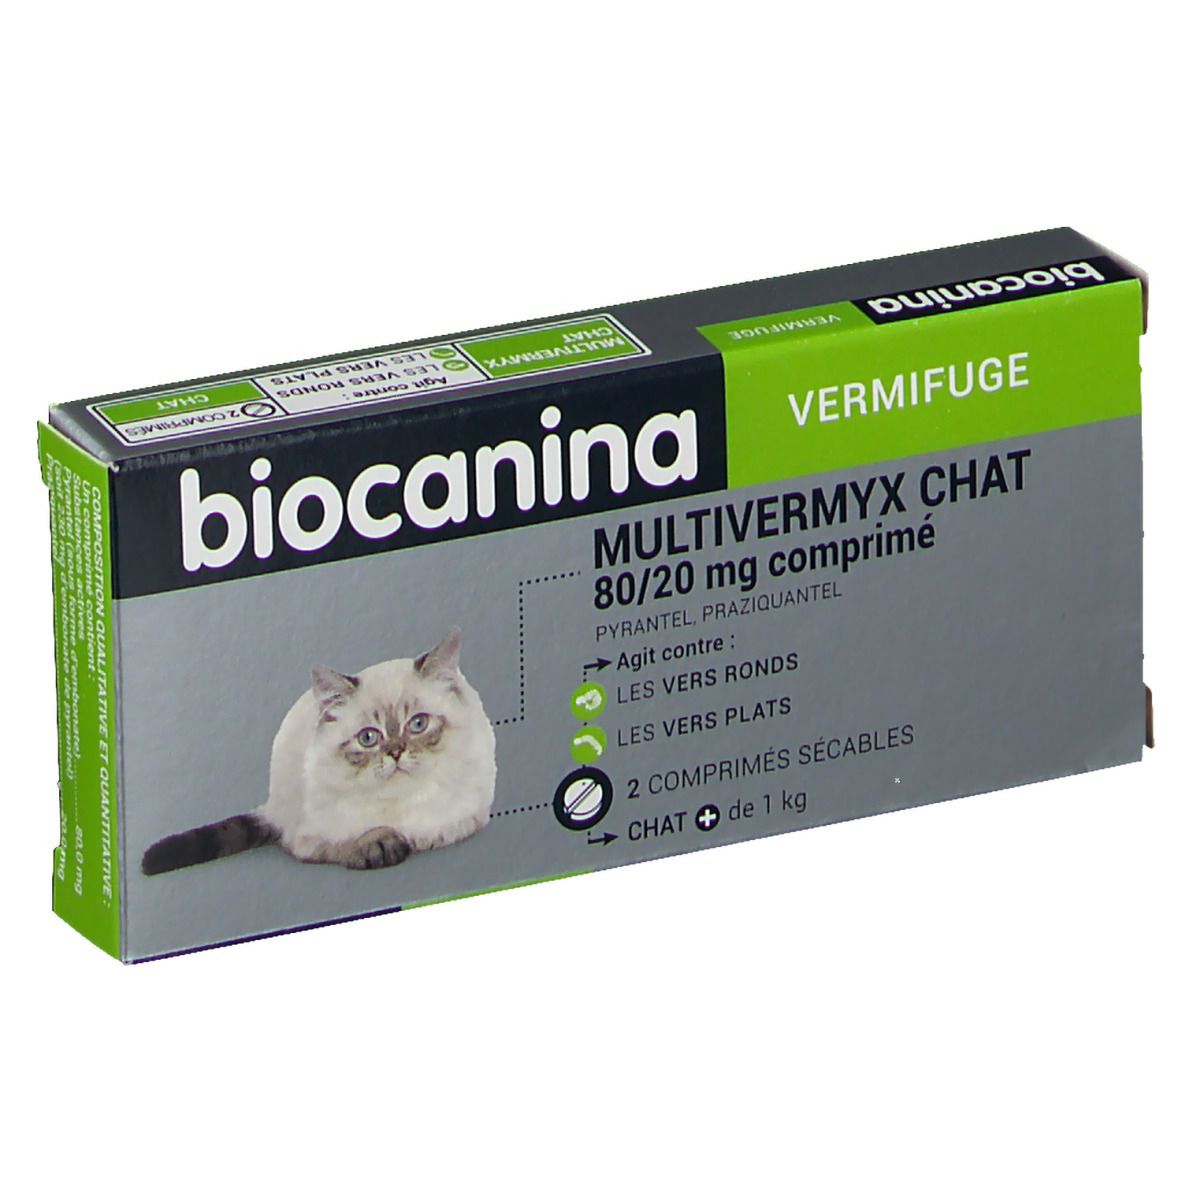 biocanina Vermifuge Multivermyx Chat